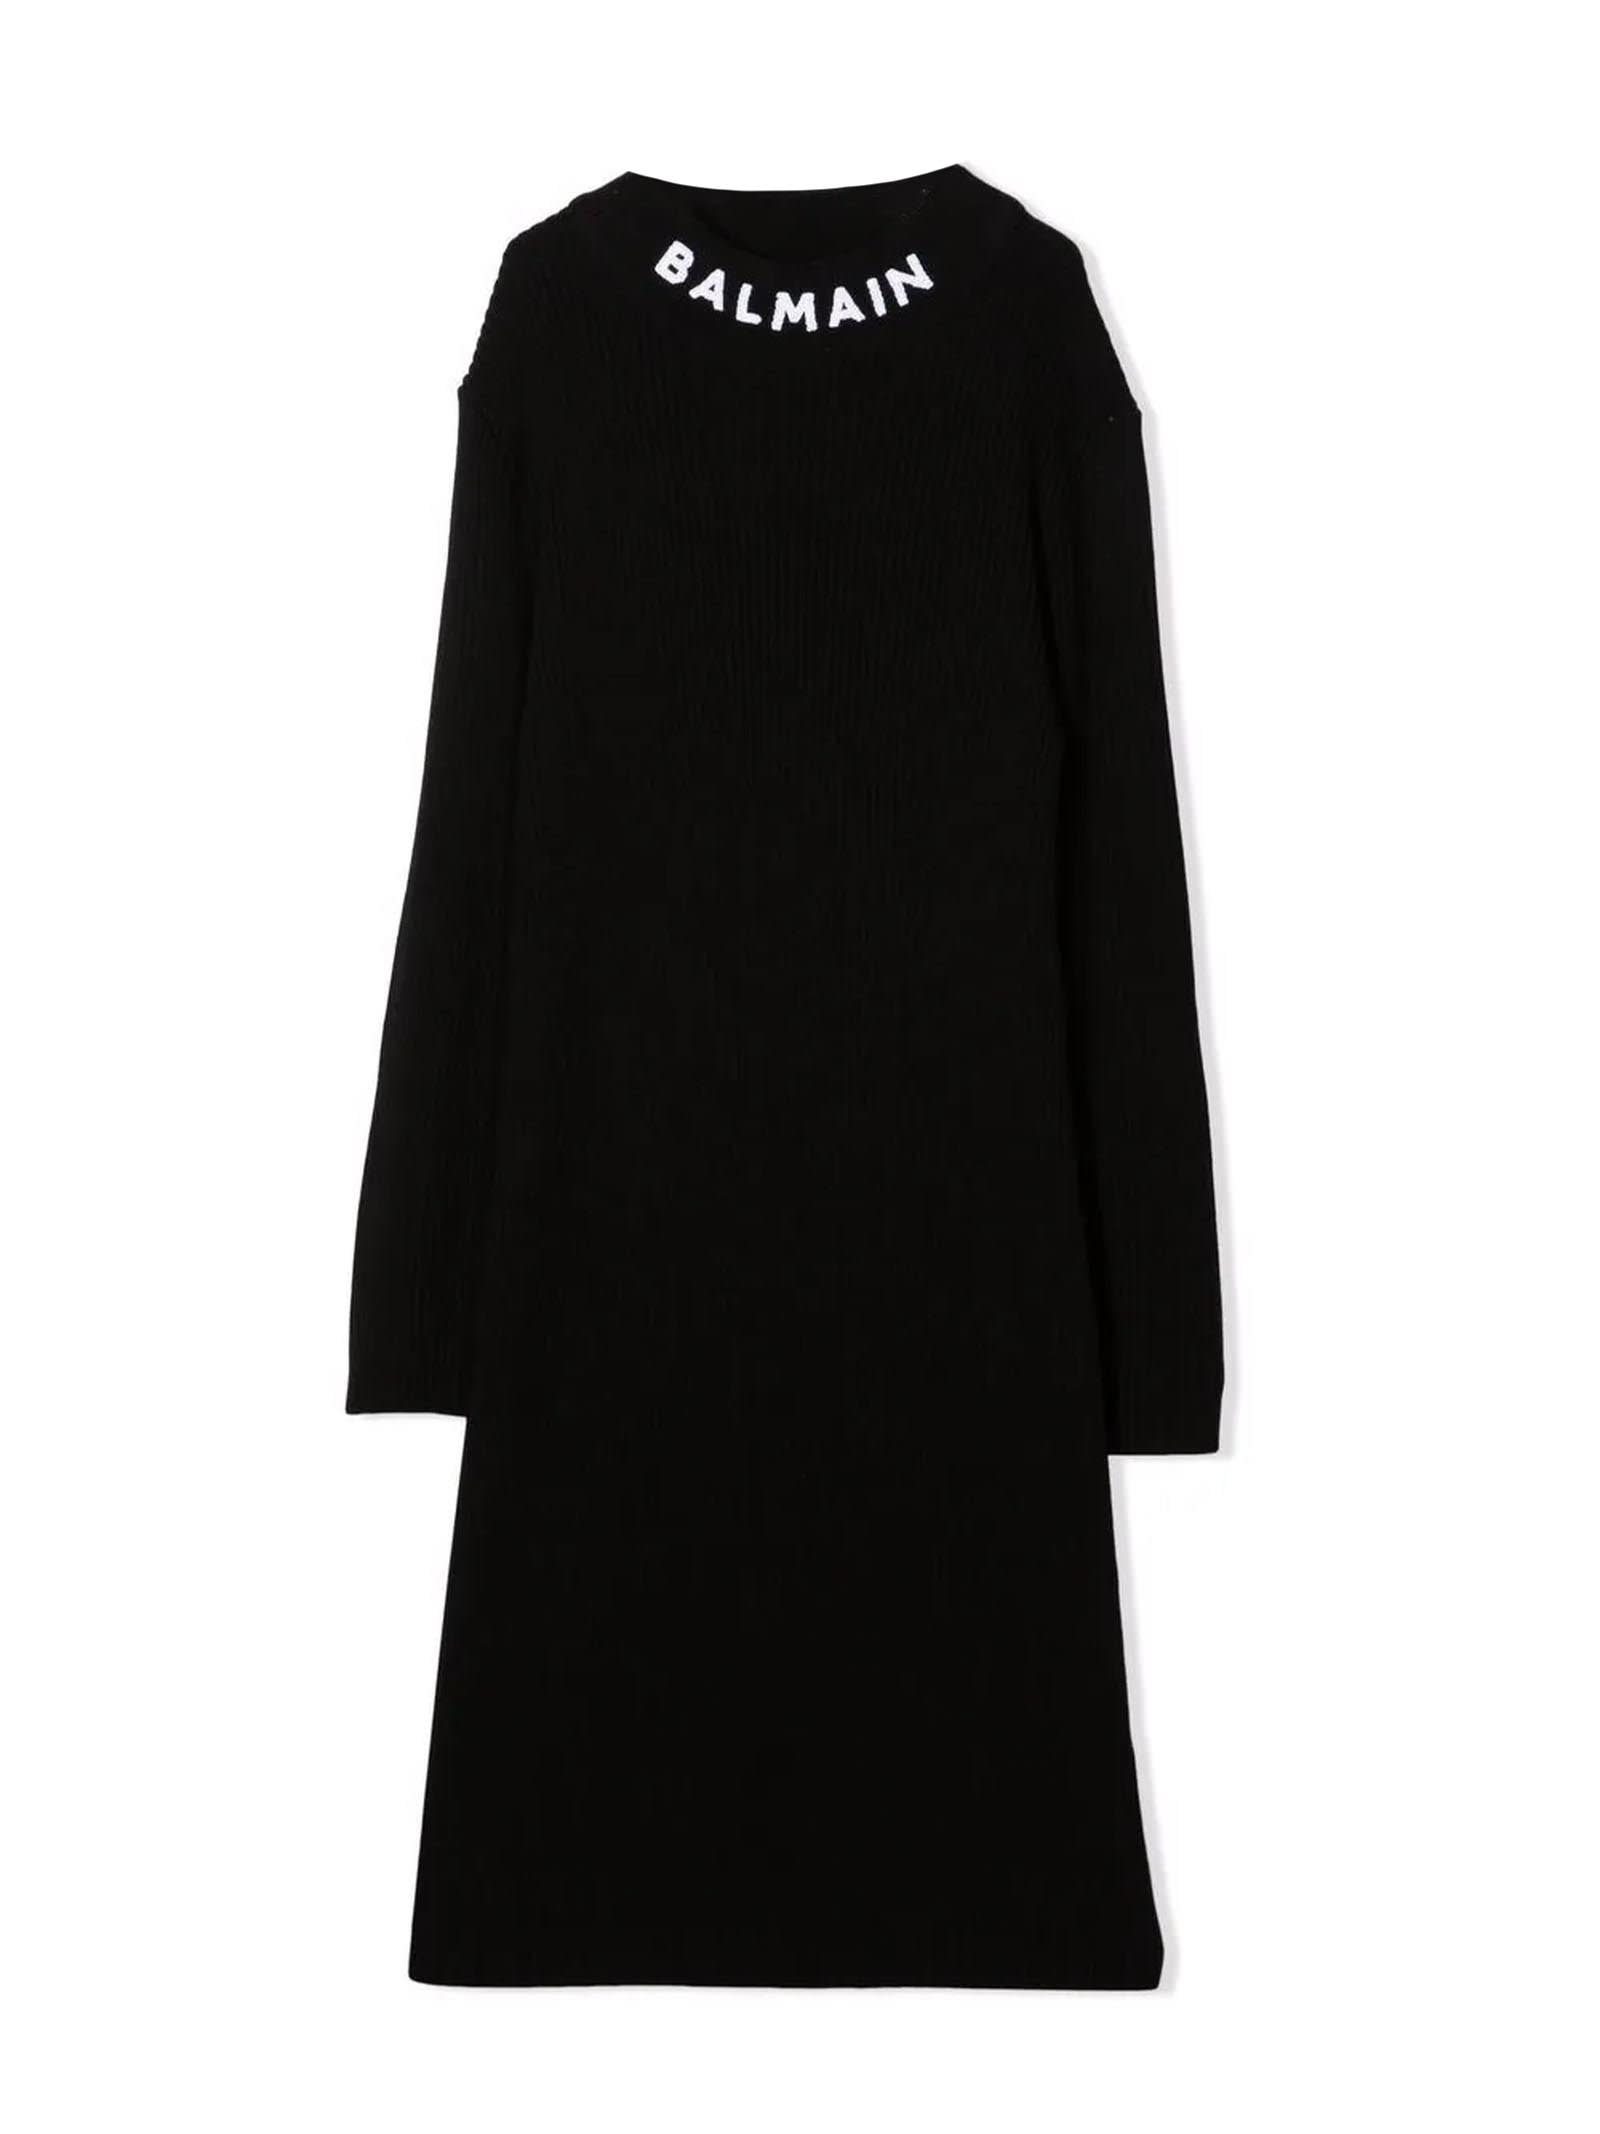 Balmain Black Virgin Wool Jumper Dress